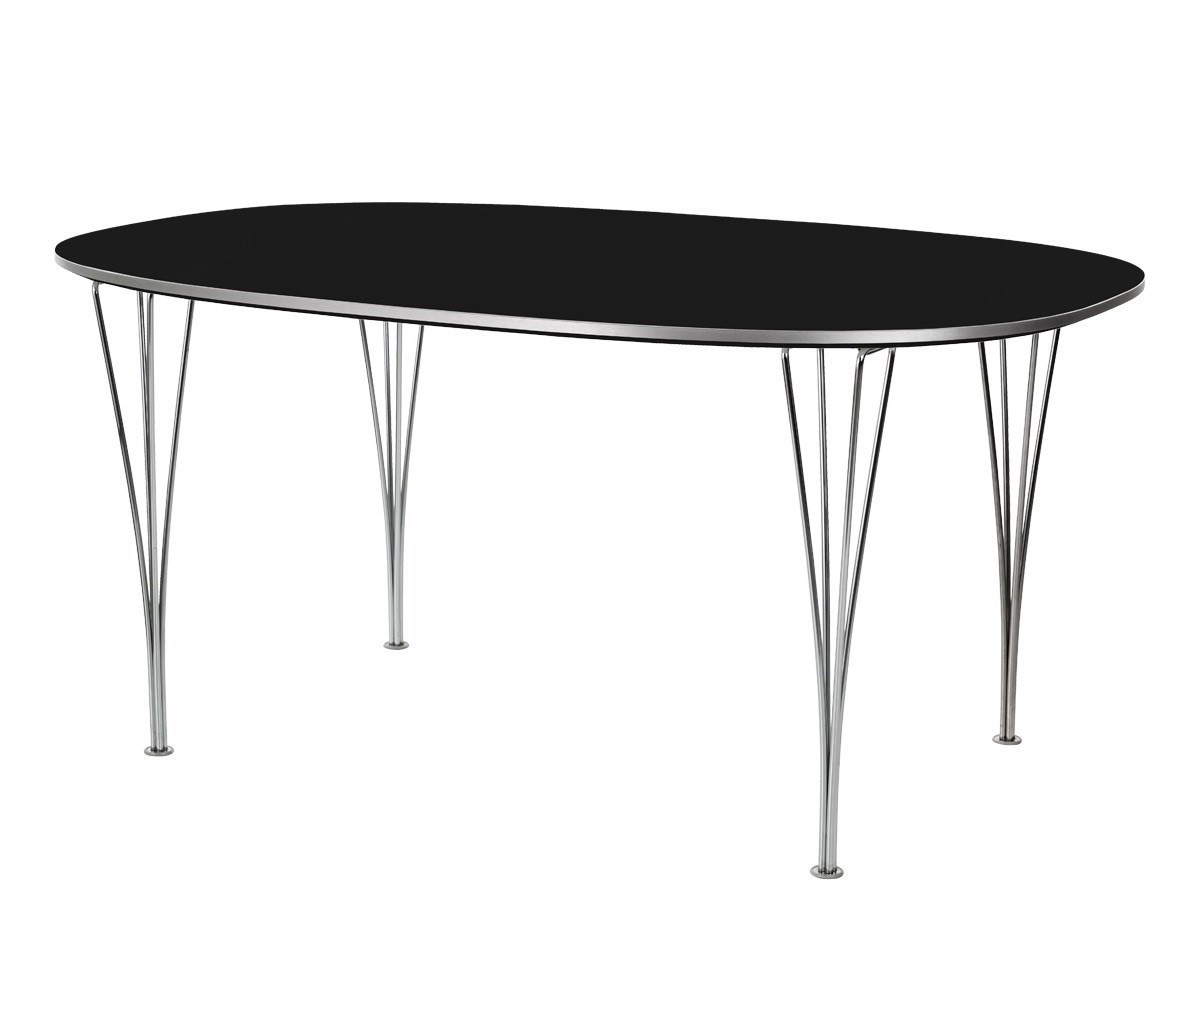 Fritz Hansen Dining Table B616, “Superellipse” Black/Chrome, 100 x 170 cm